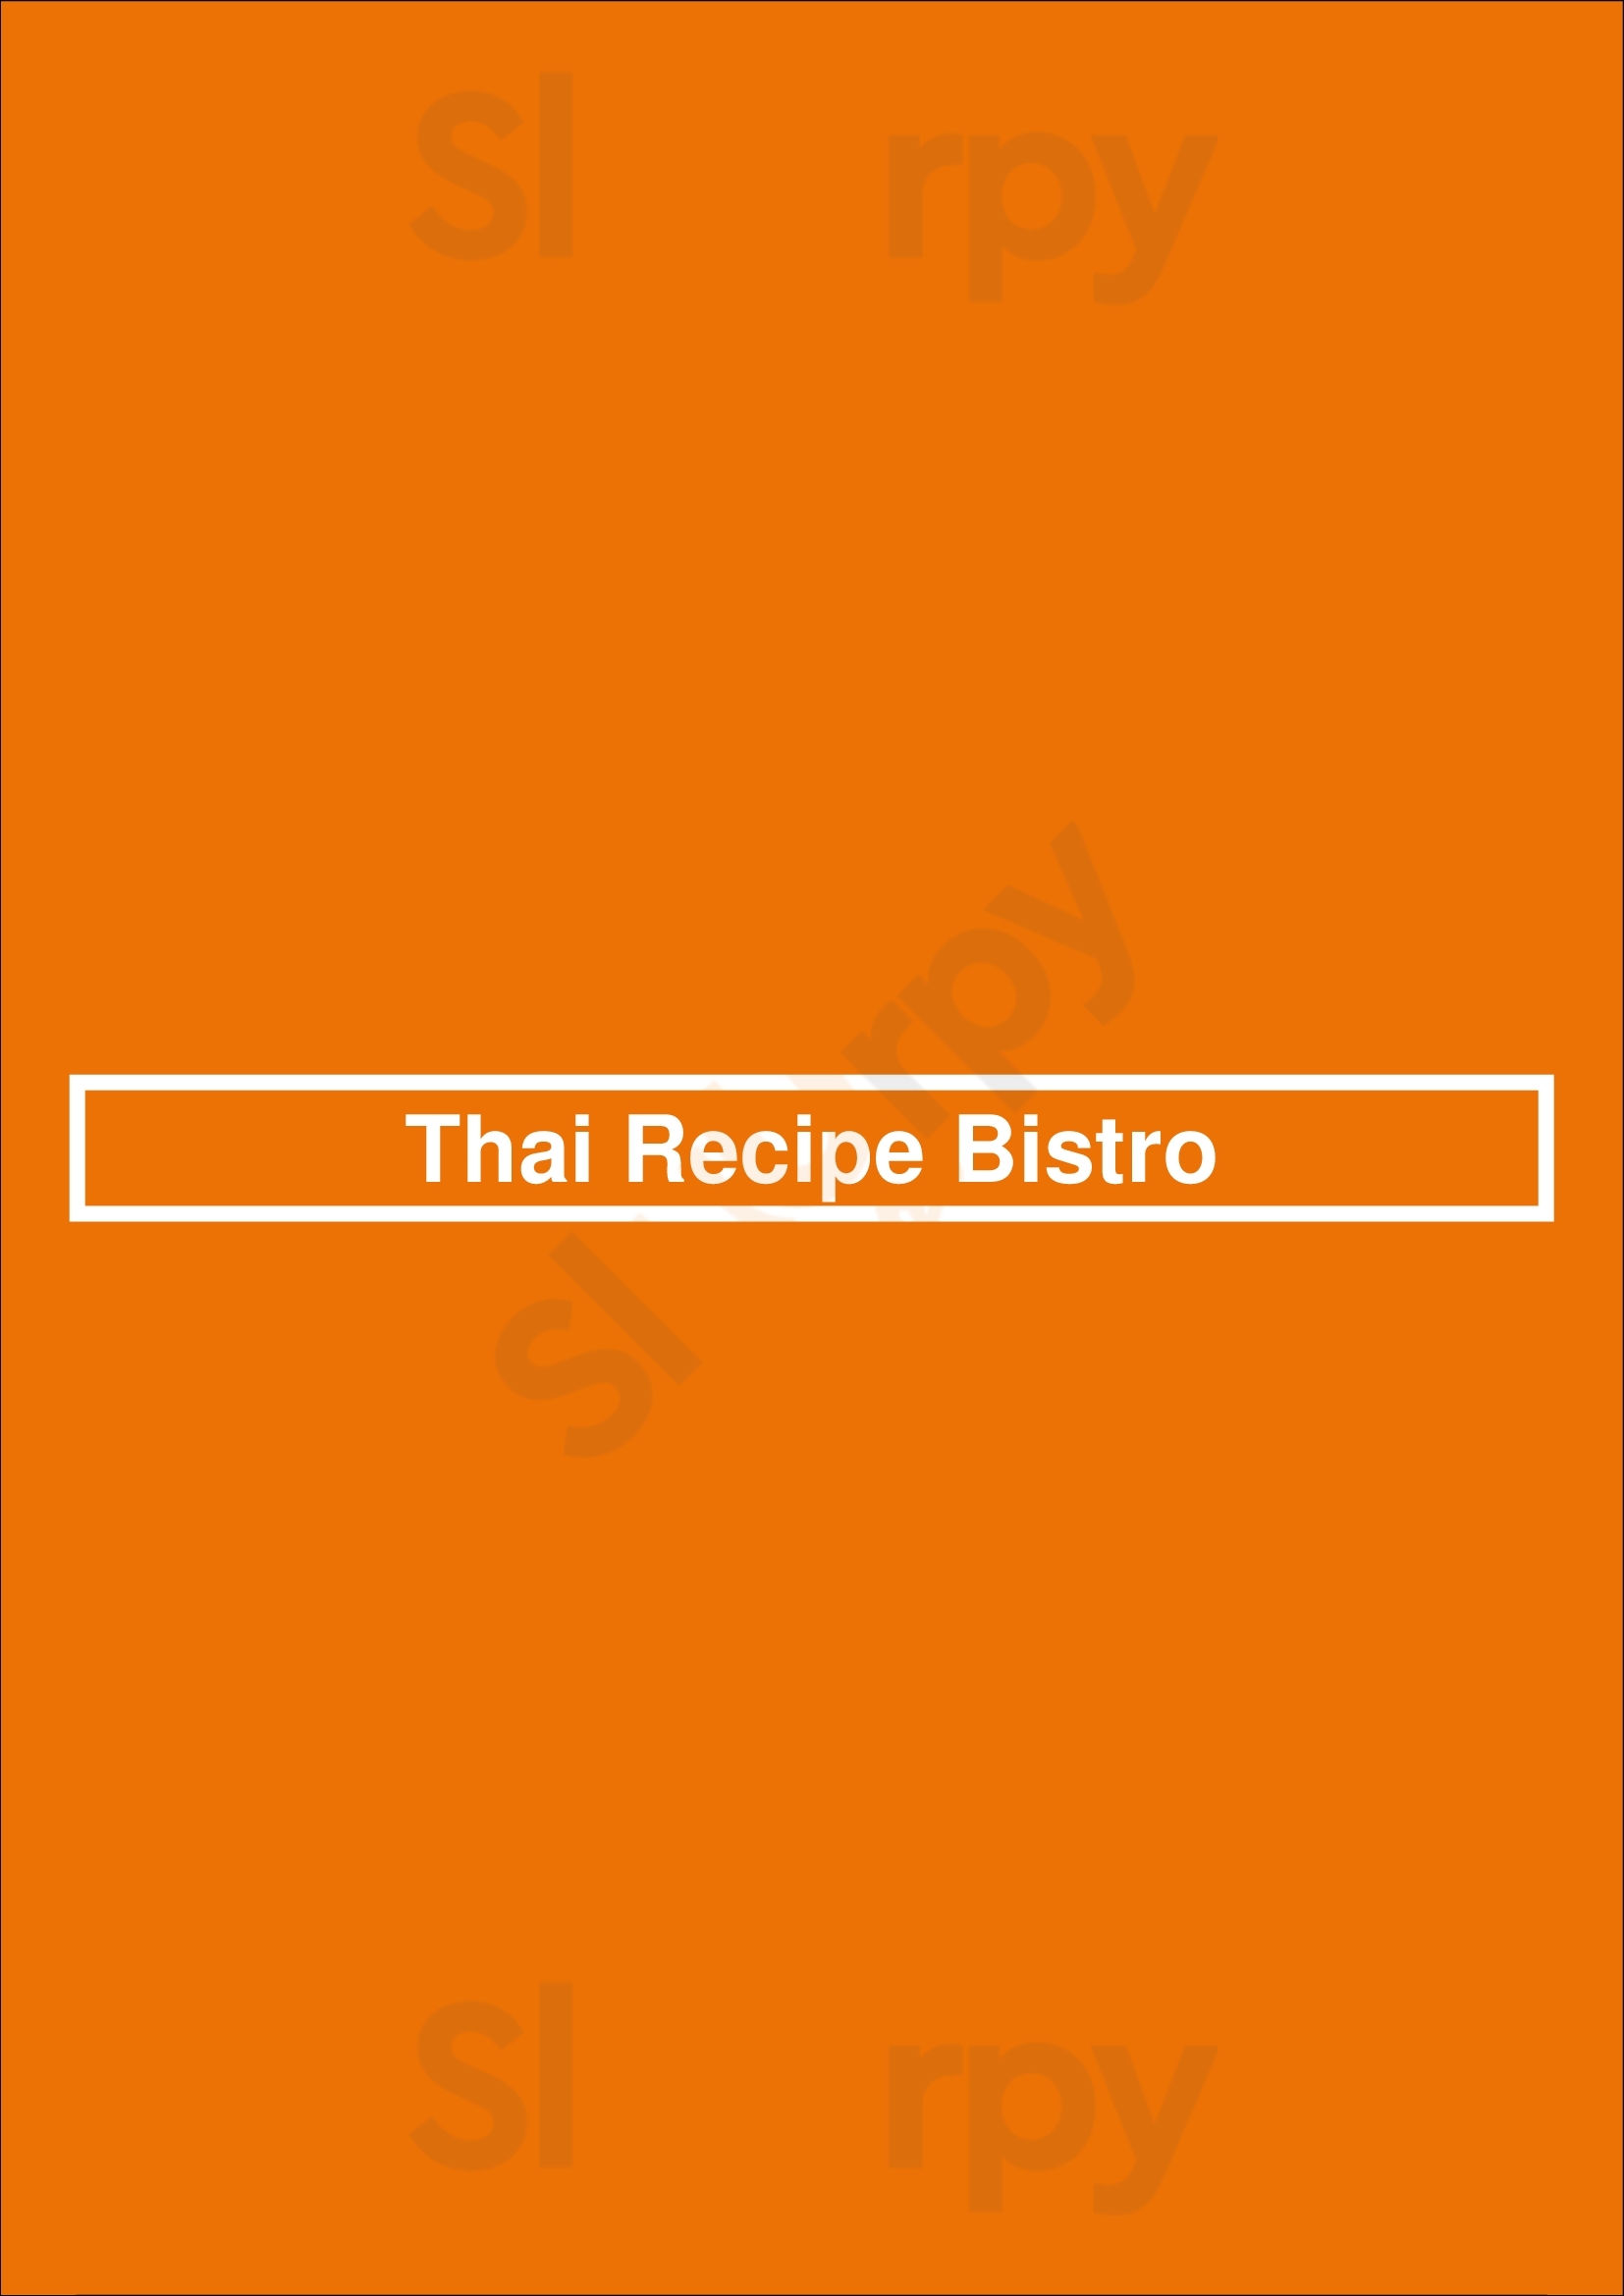 Thai Recipe Bistro Phoenix Menu - 1